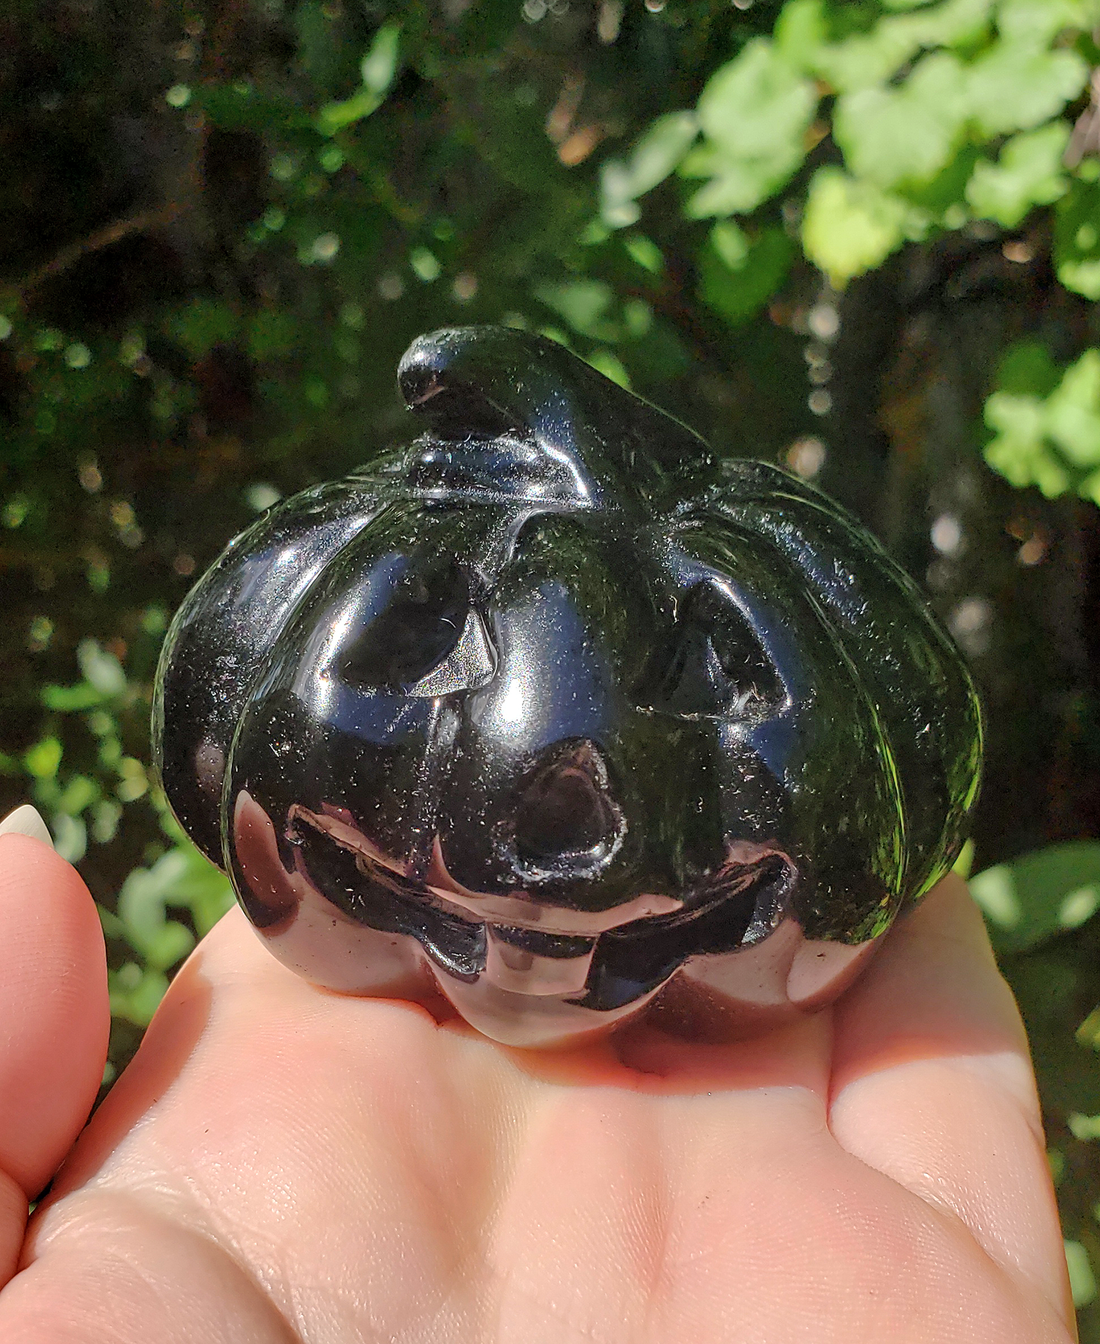 Large Obsidian Gemstone Happy Pumpkin Totem Jack-o-Lantern Carving - Cheerful Pumpkin